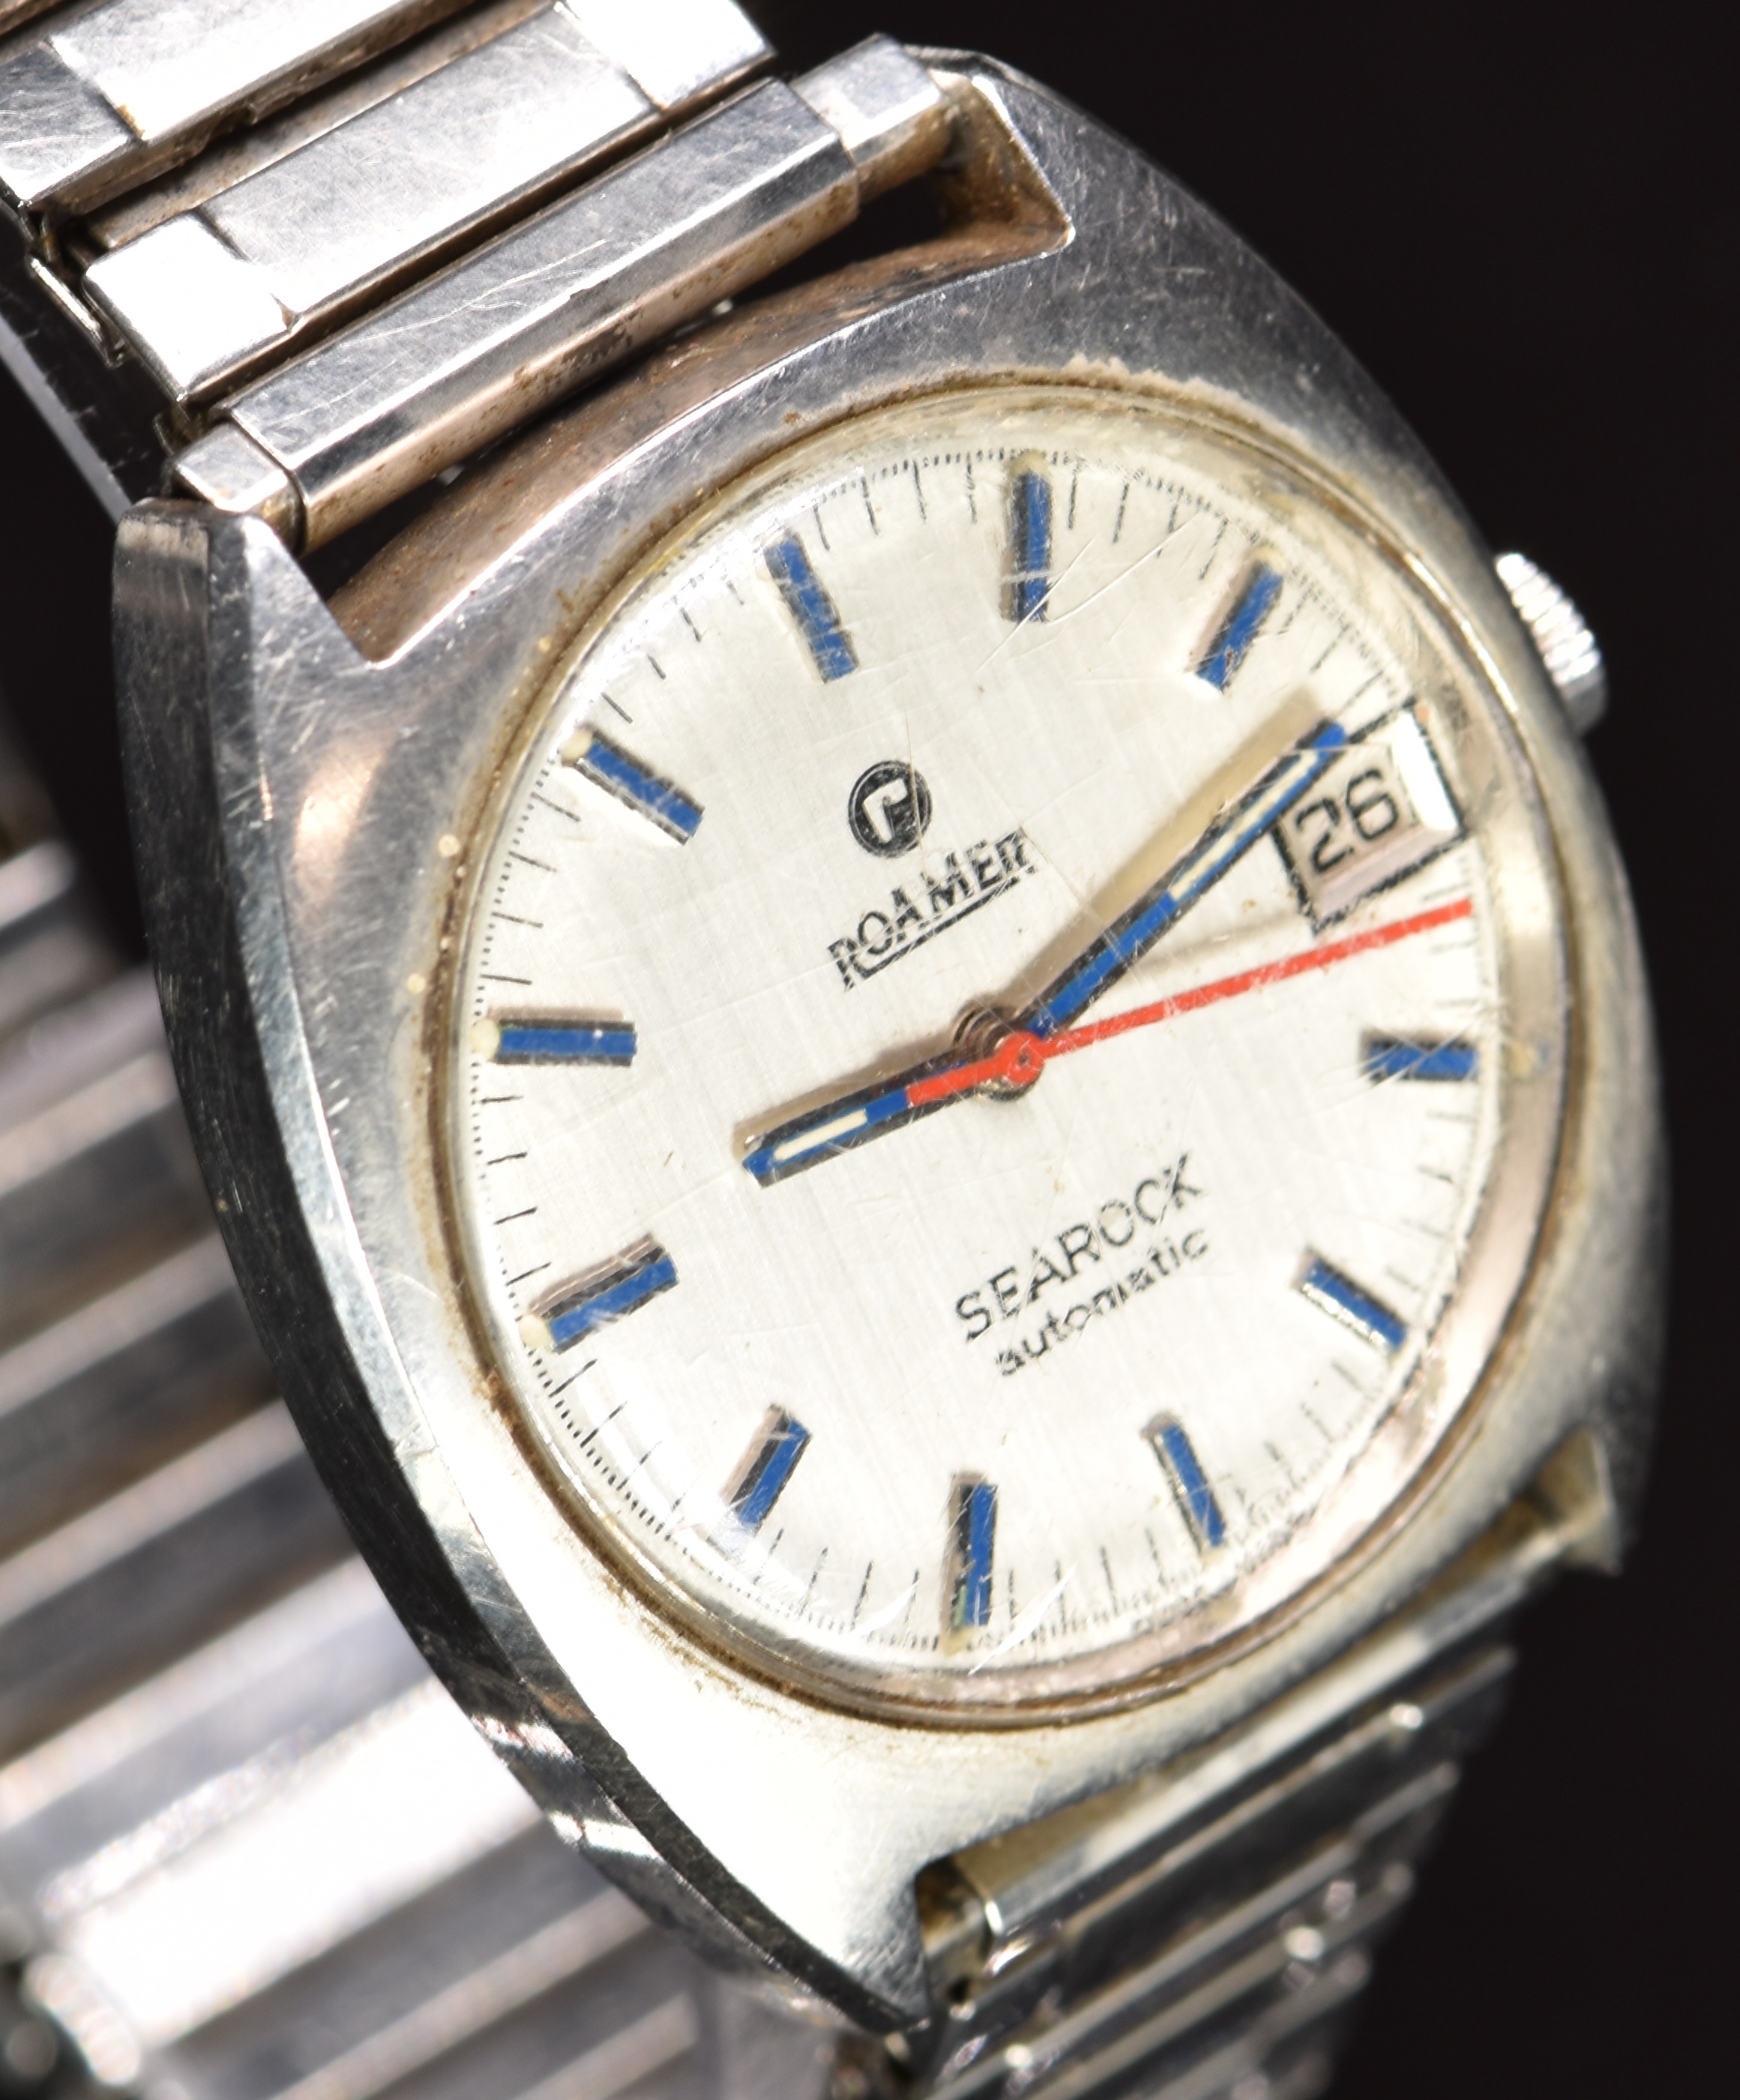 Roamer Searock gentleman’s automatic wristwatch ref. 471.2120.328 with date aperture, silver dial, - Image 3 of 5